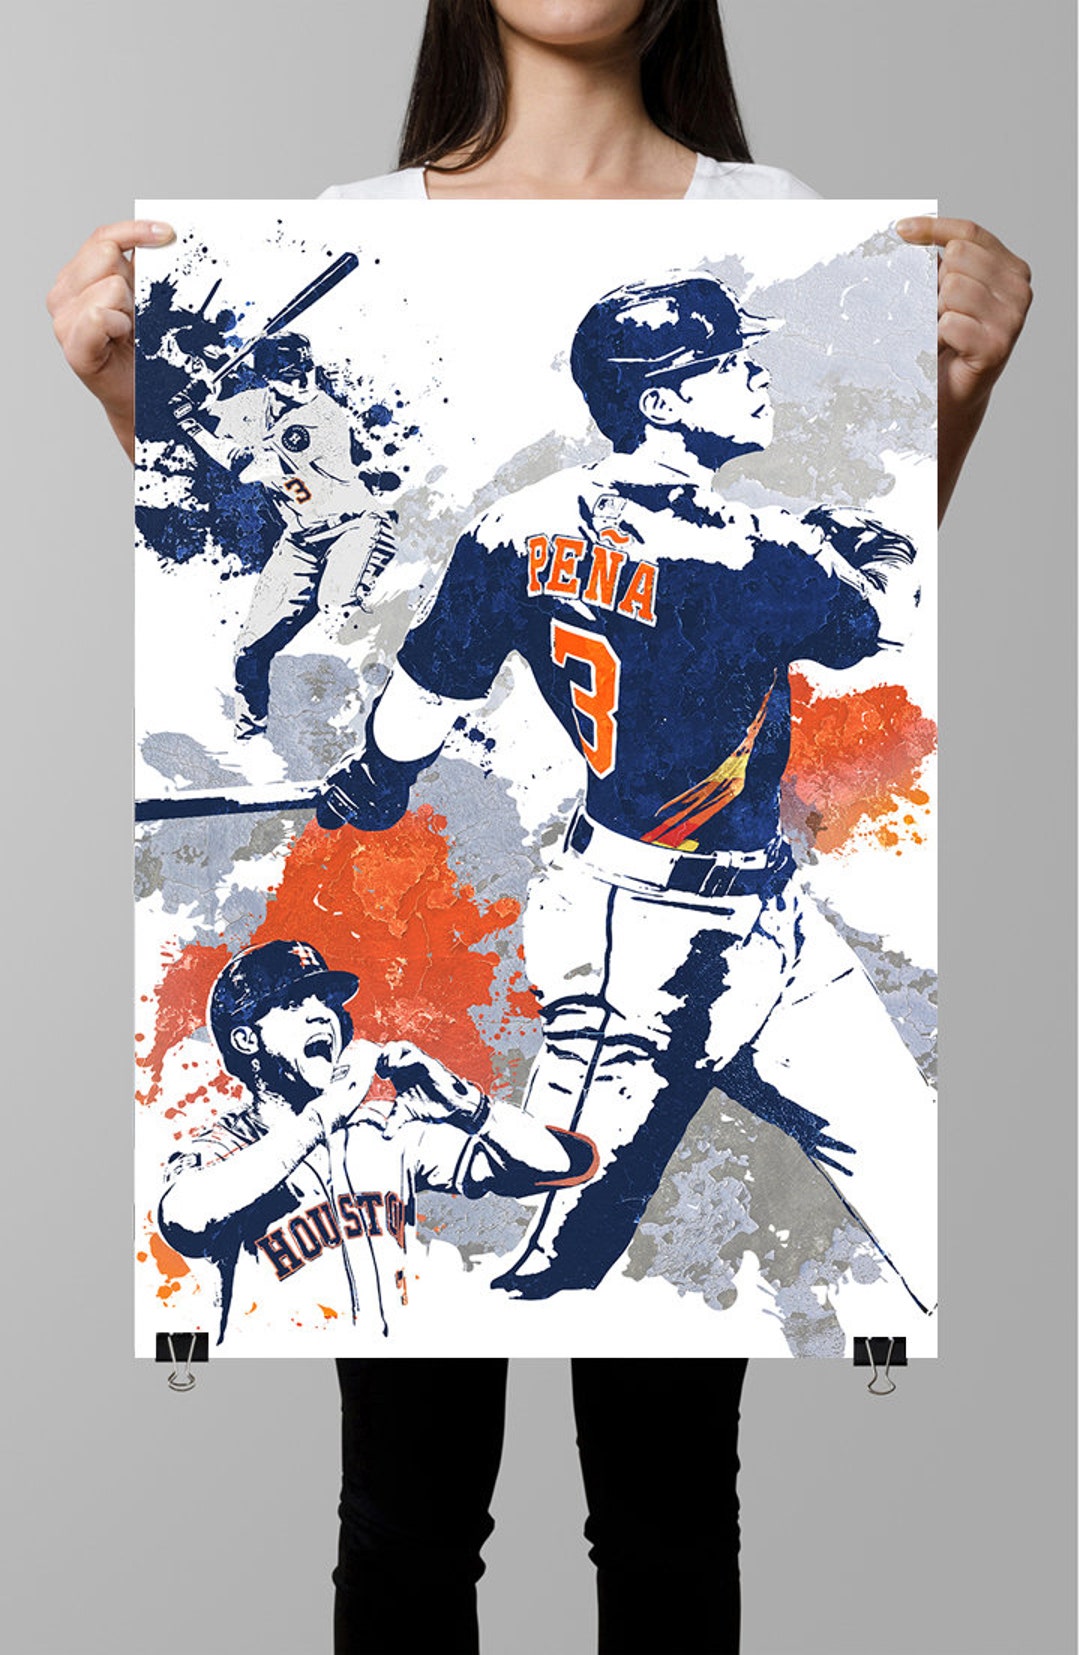 Jeremy Pena Houston Astros Poster Wall Art Sports Poster 